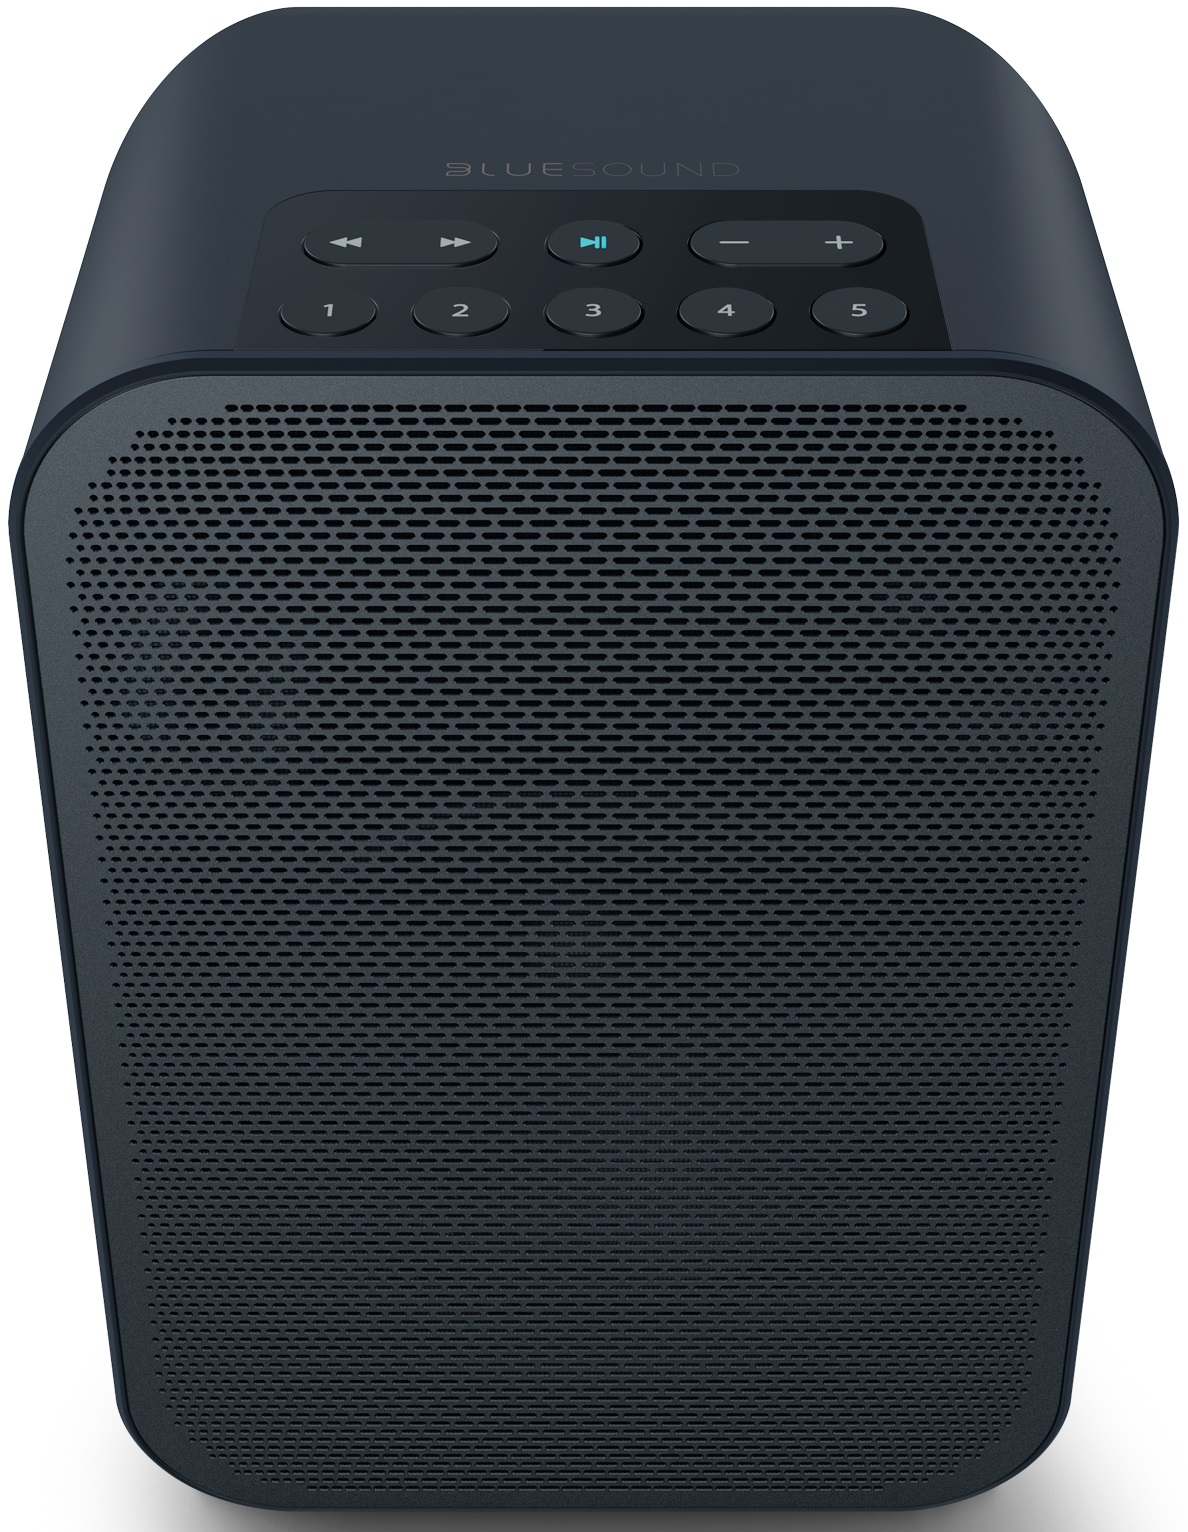 bluesound-pulse-flex-2i-portable-wireless-multi-room-music-streaming-speaker-black